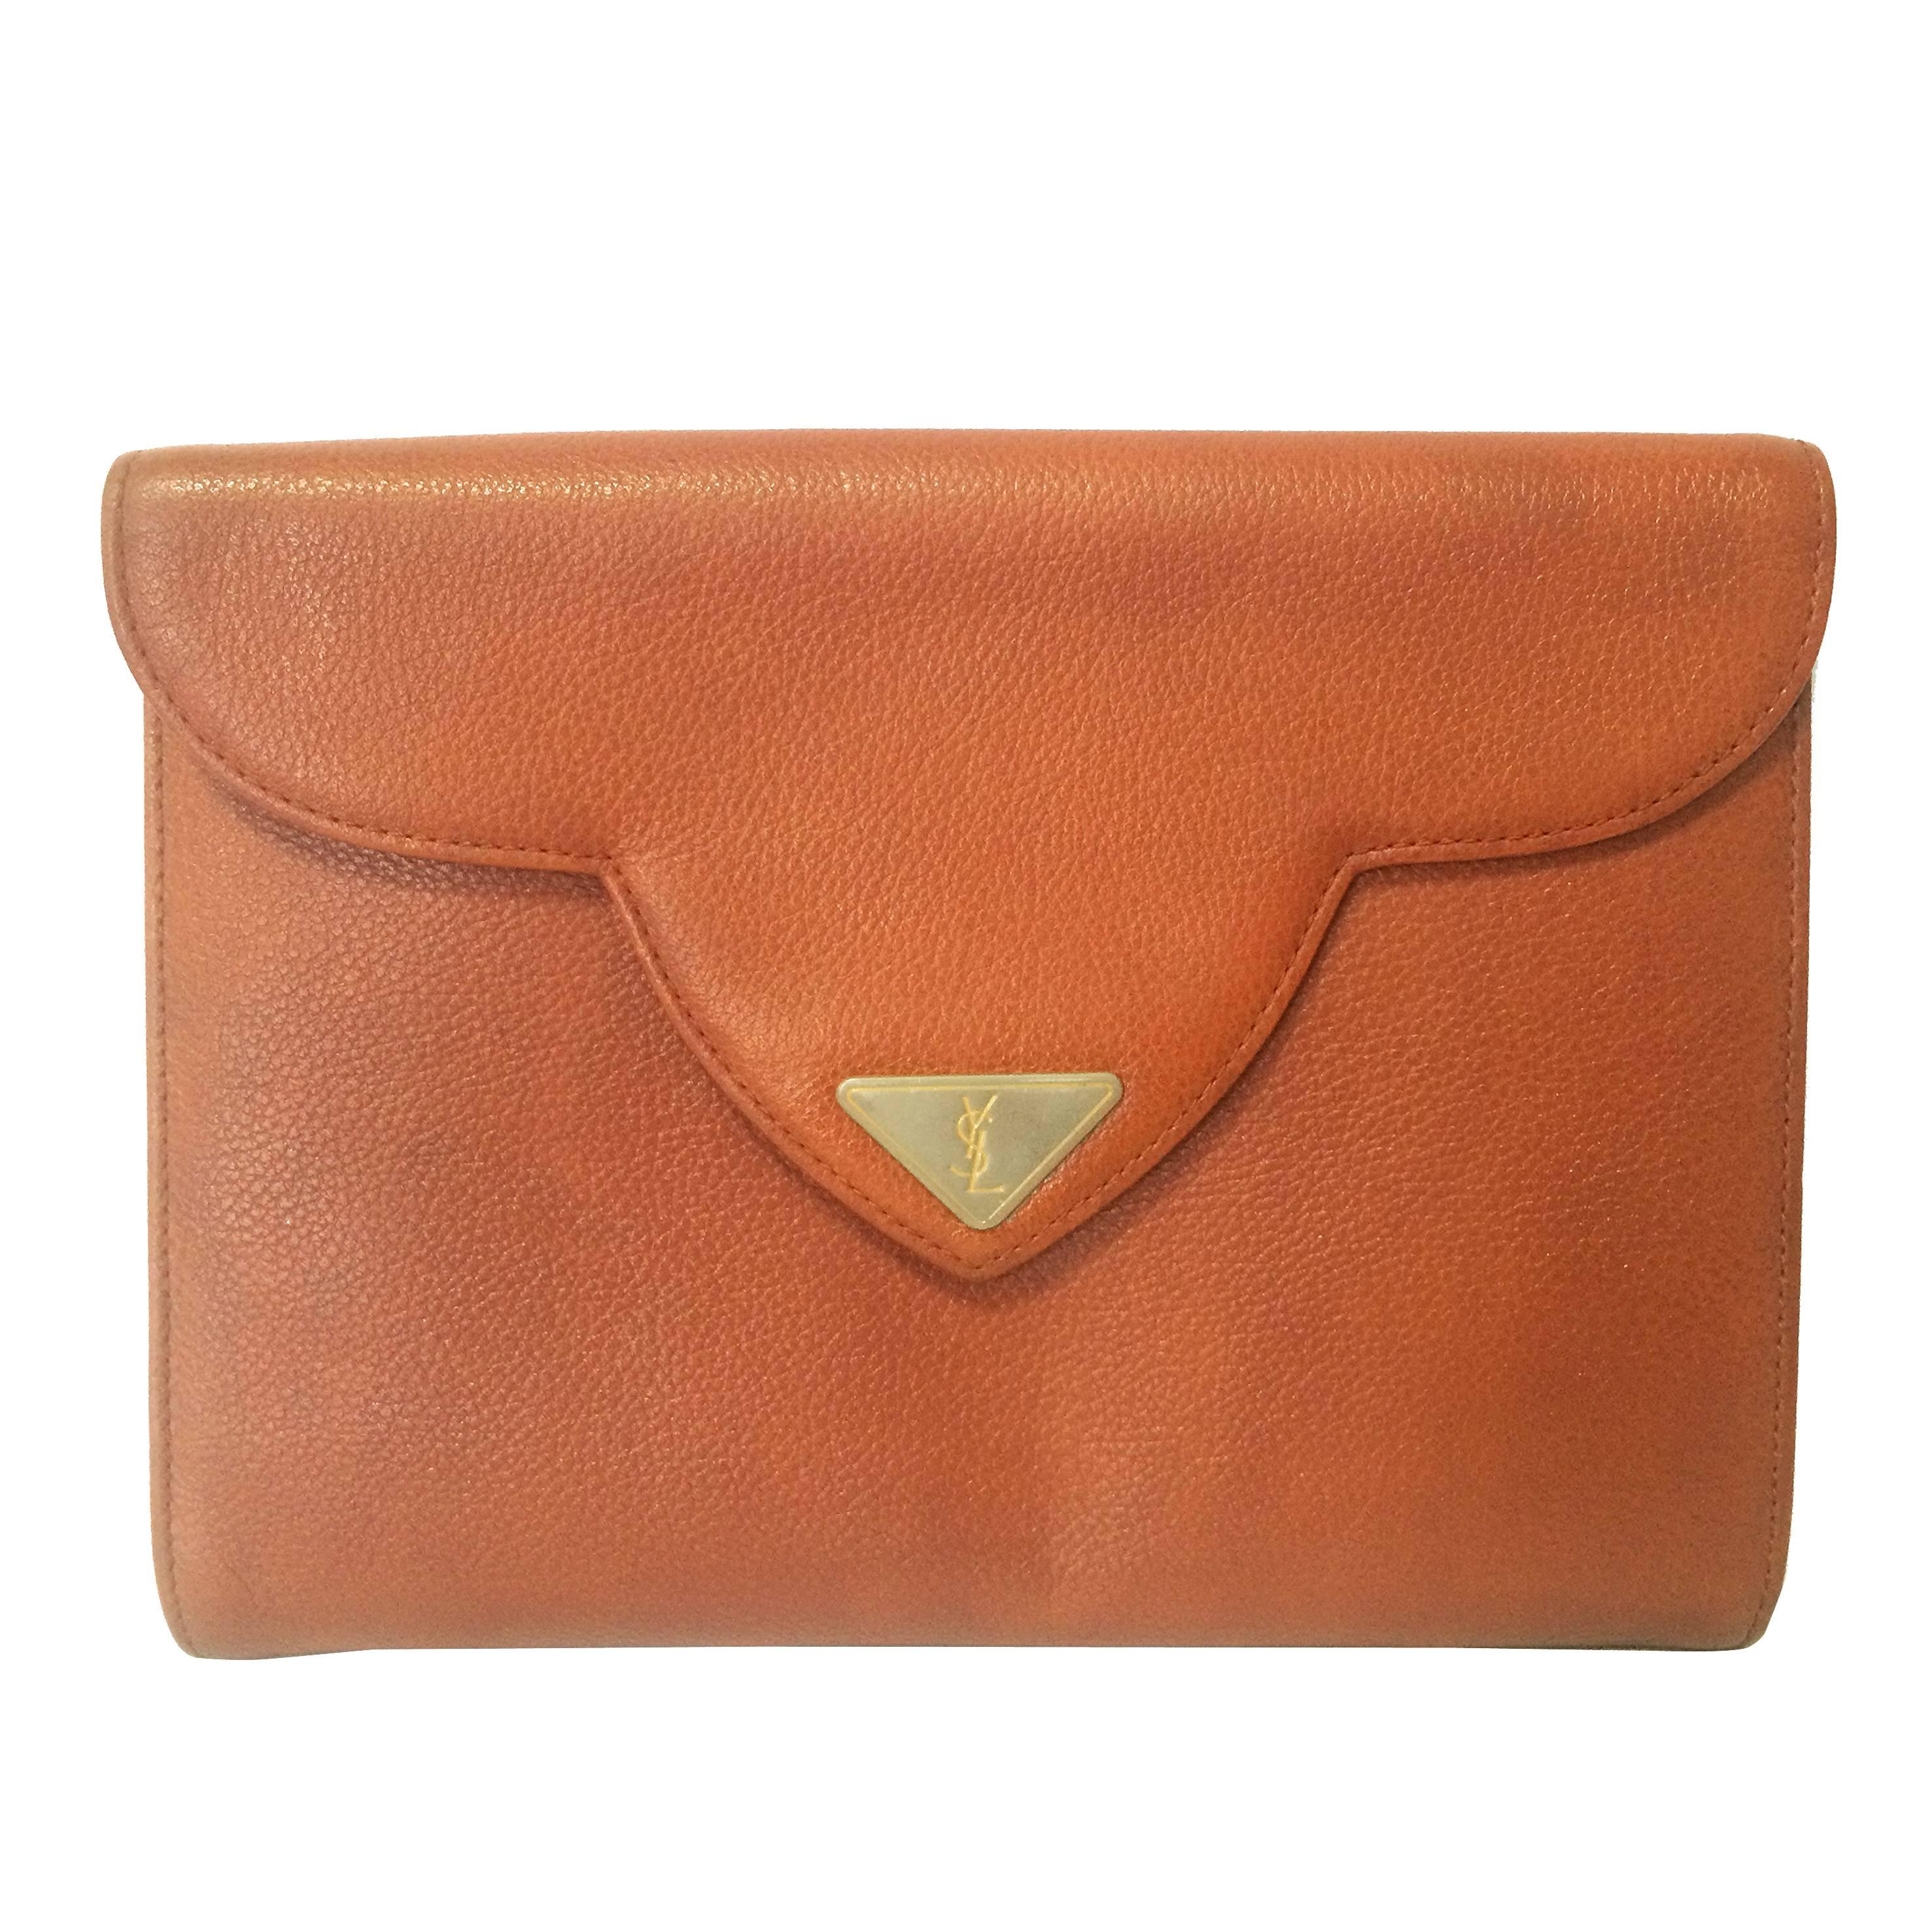 Vintage Yves Saint Laurent genuine brown leather clutch purse with beak tip flap